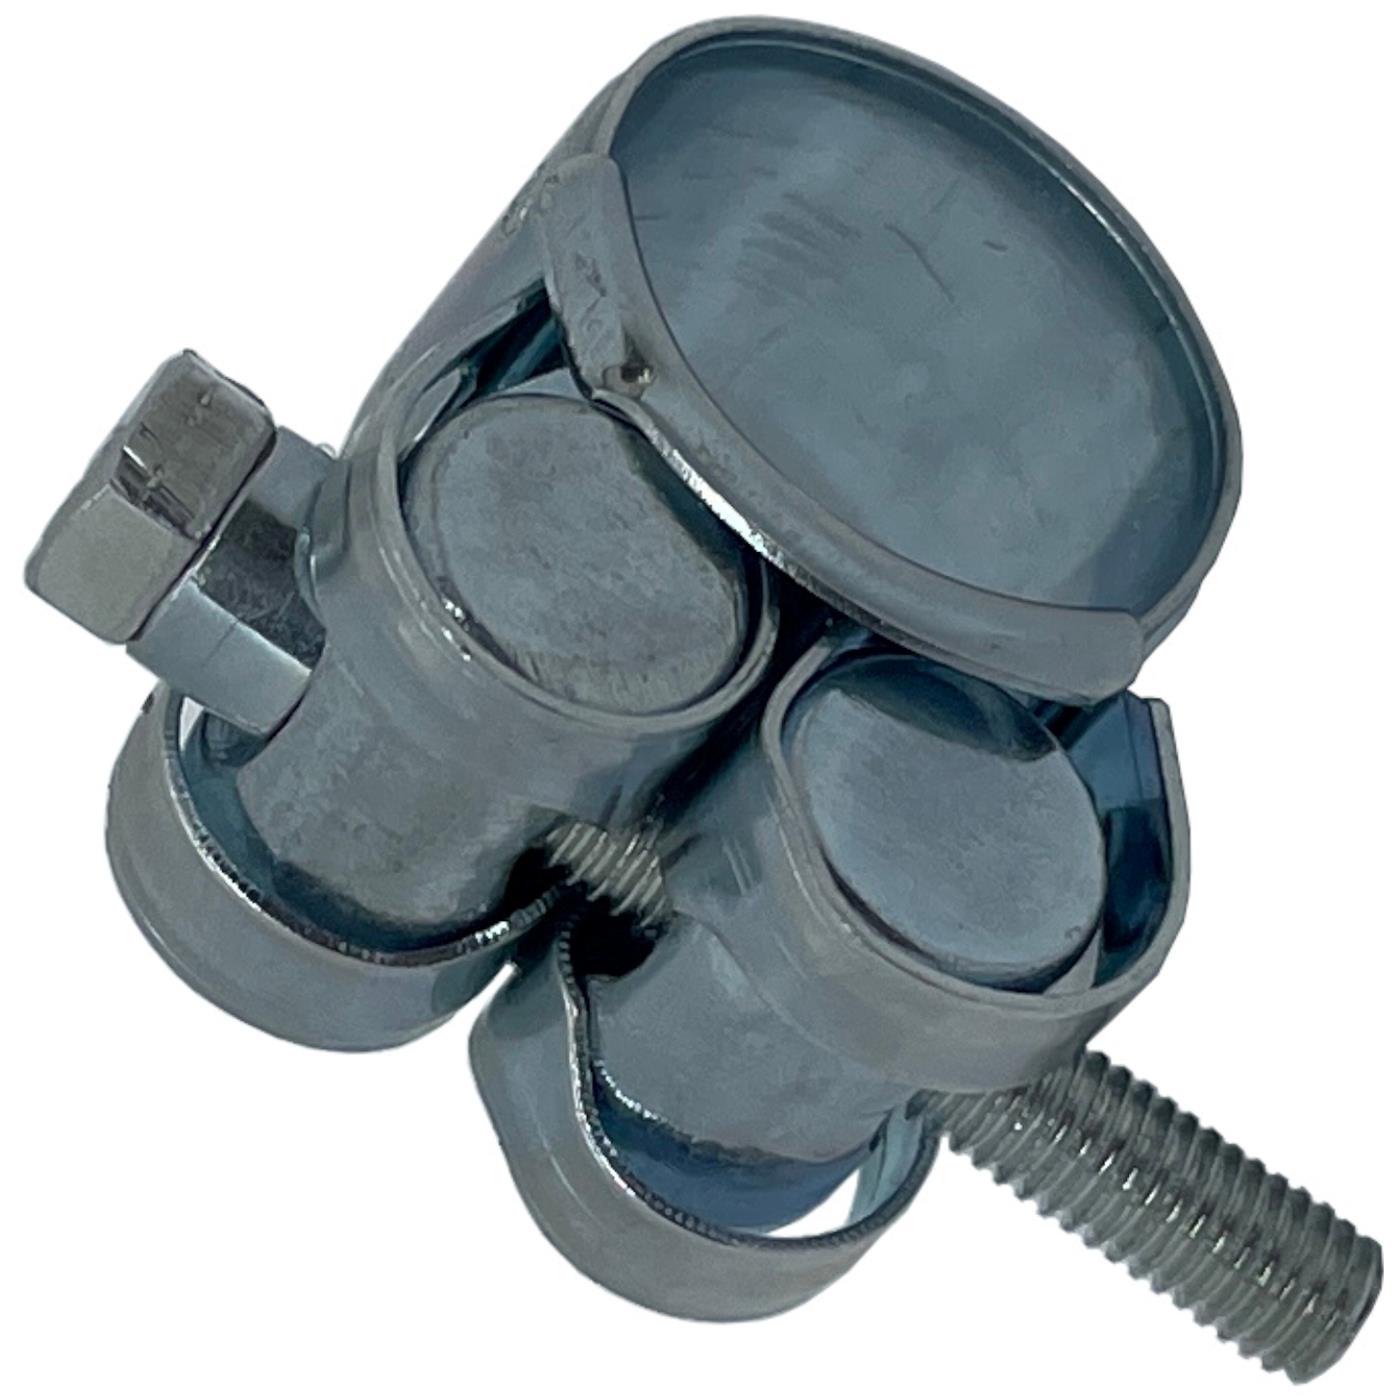 4x Lumonic Hinge pin clamp 20-22mm Galvanised Exhaust clamp for construction cars trucks